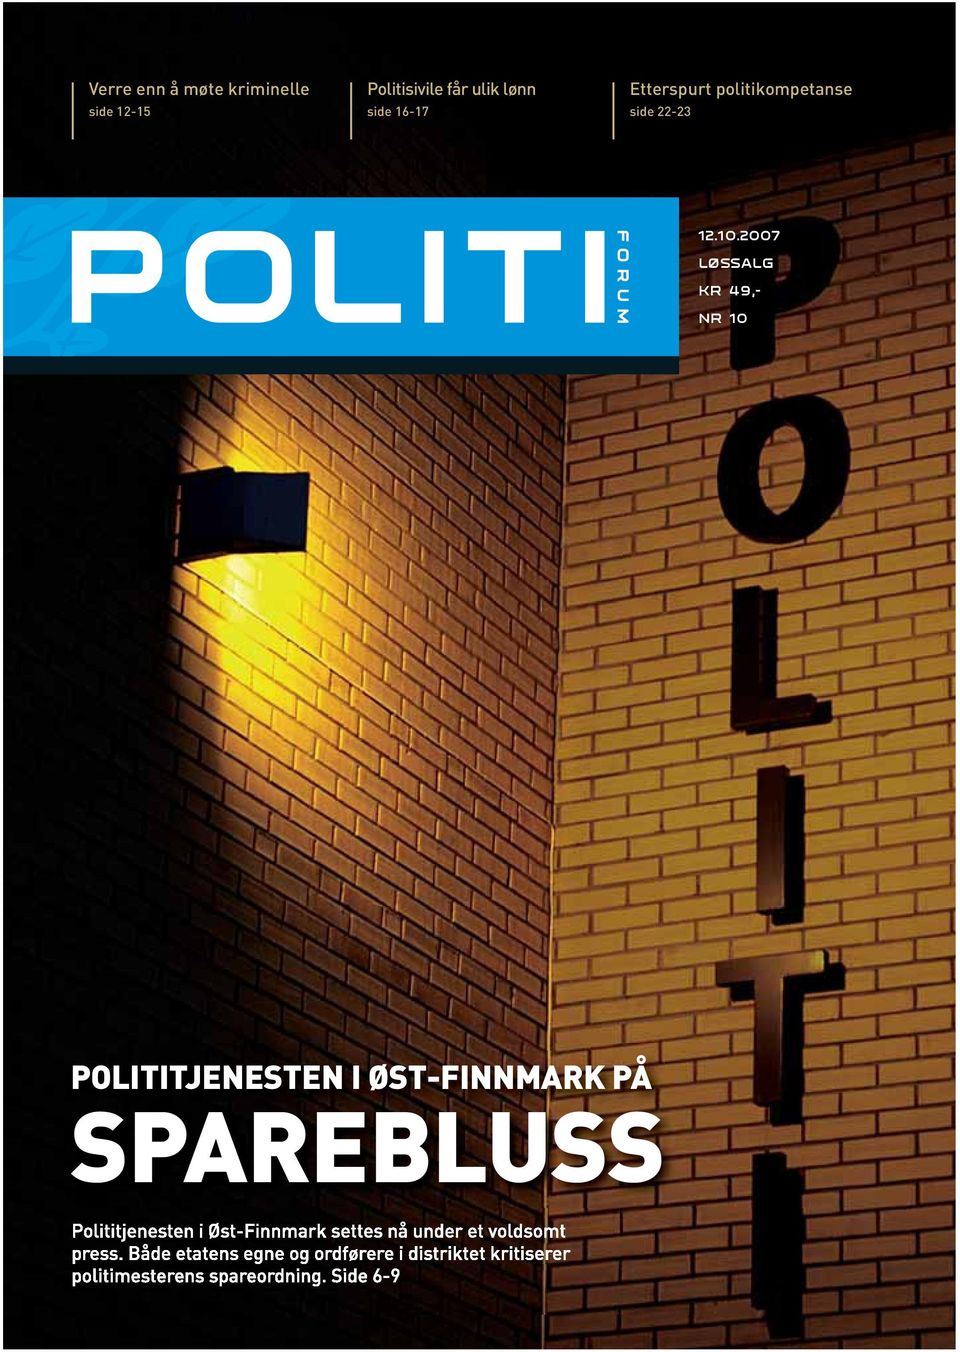 2007 LØSSALG KR 49,- NR 10 POLITITJENESTEN I ØST-FINNMARK PÅ SPAREBLUSS Polititjenesten